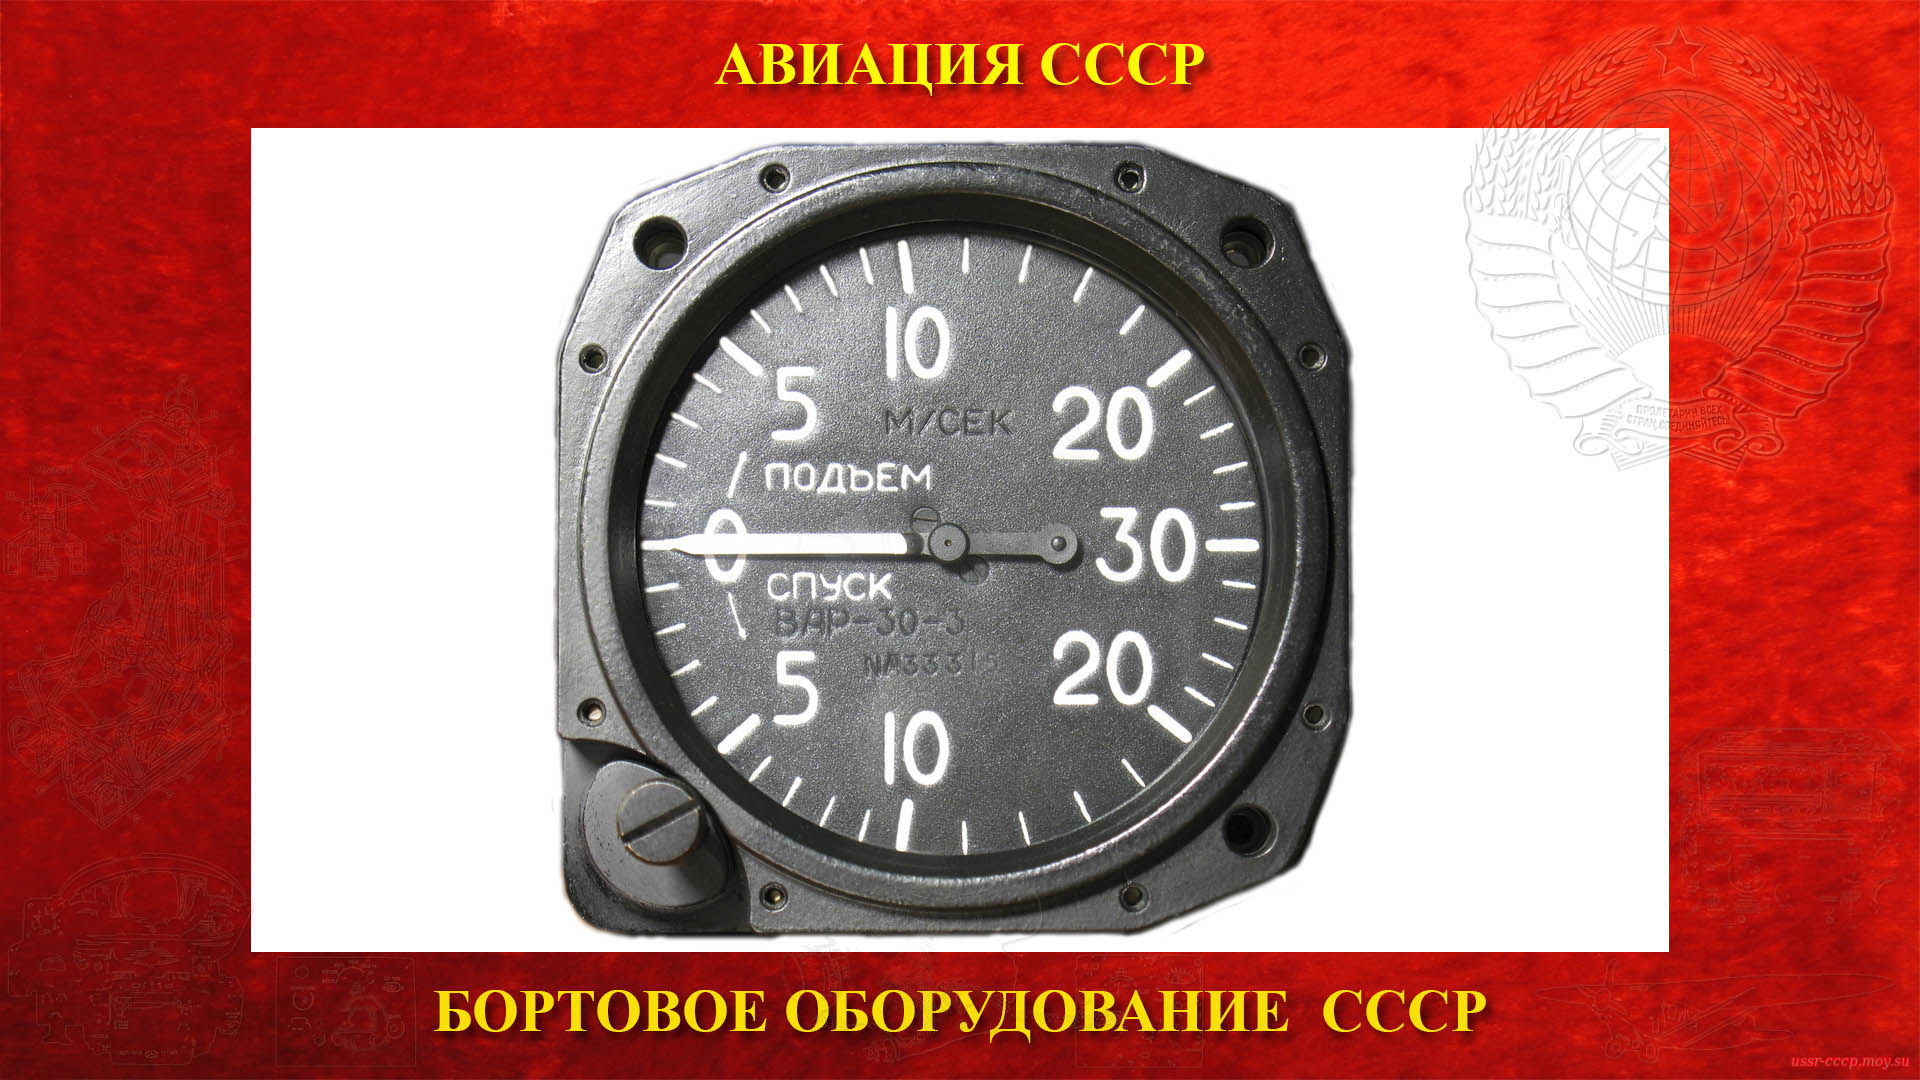 ВР-30-3 — Вариометр СССР (повествование)